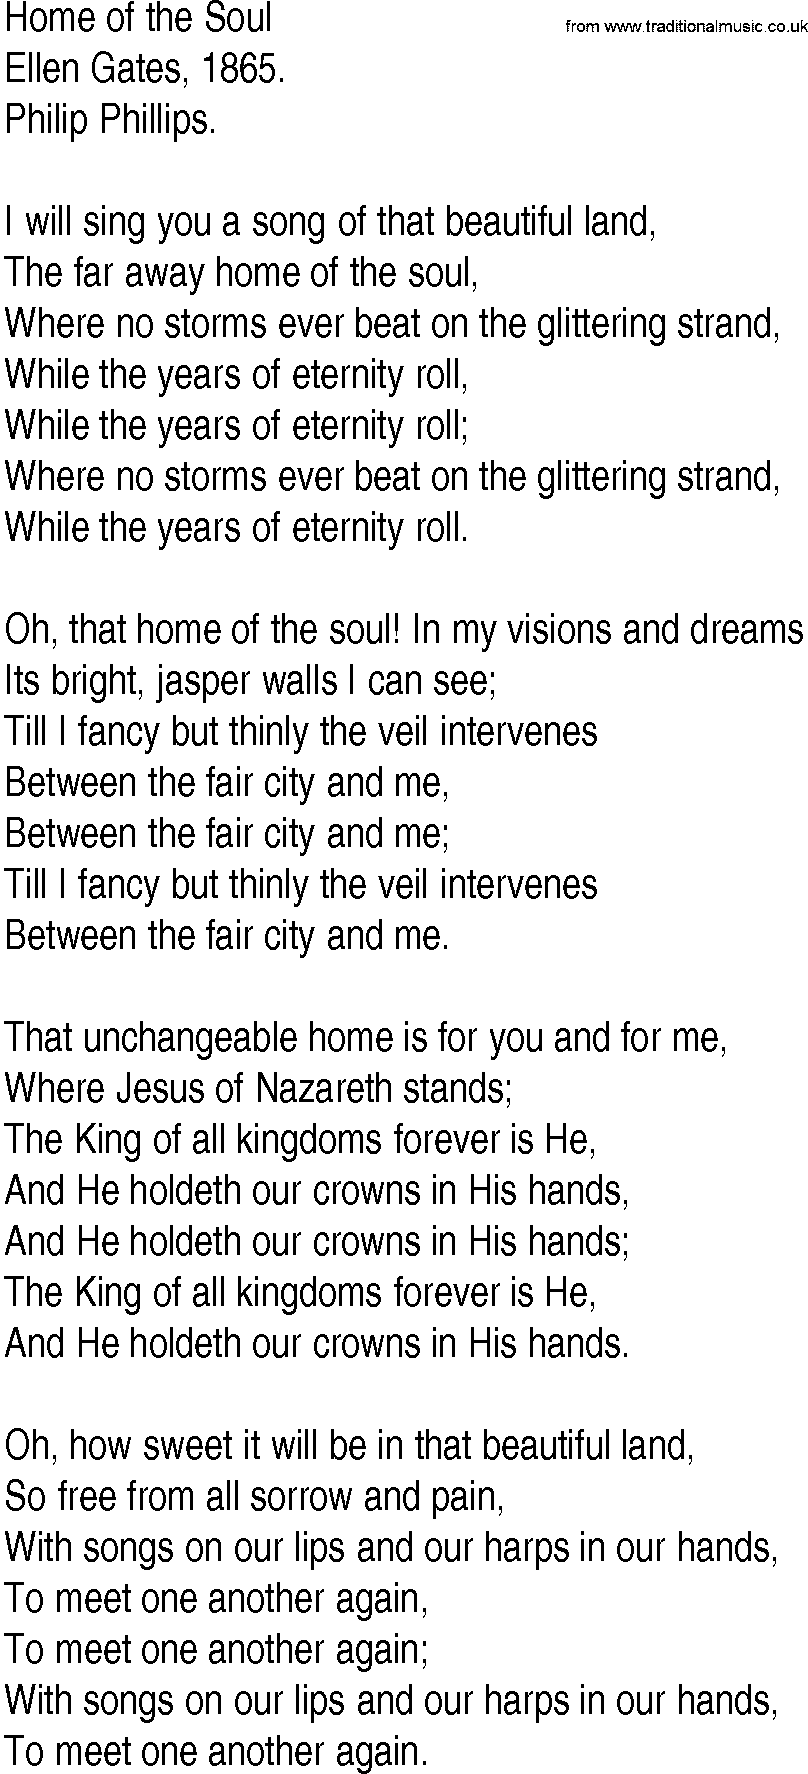 Hymn and Gospel Song: Home of the Soul by Ellen Gates lyrics